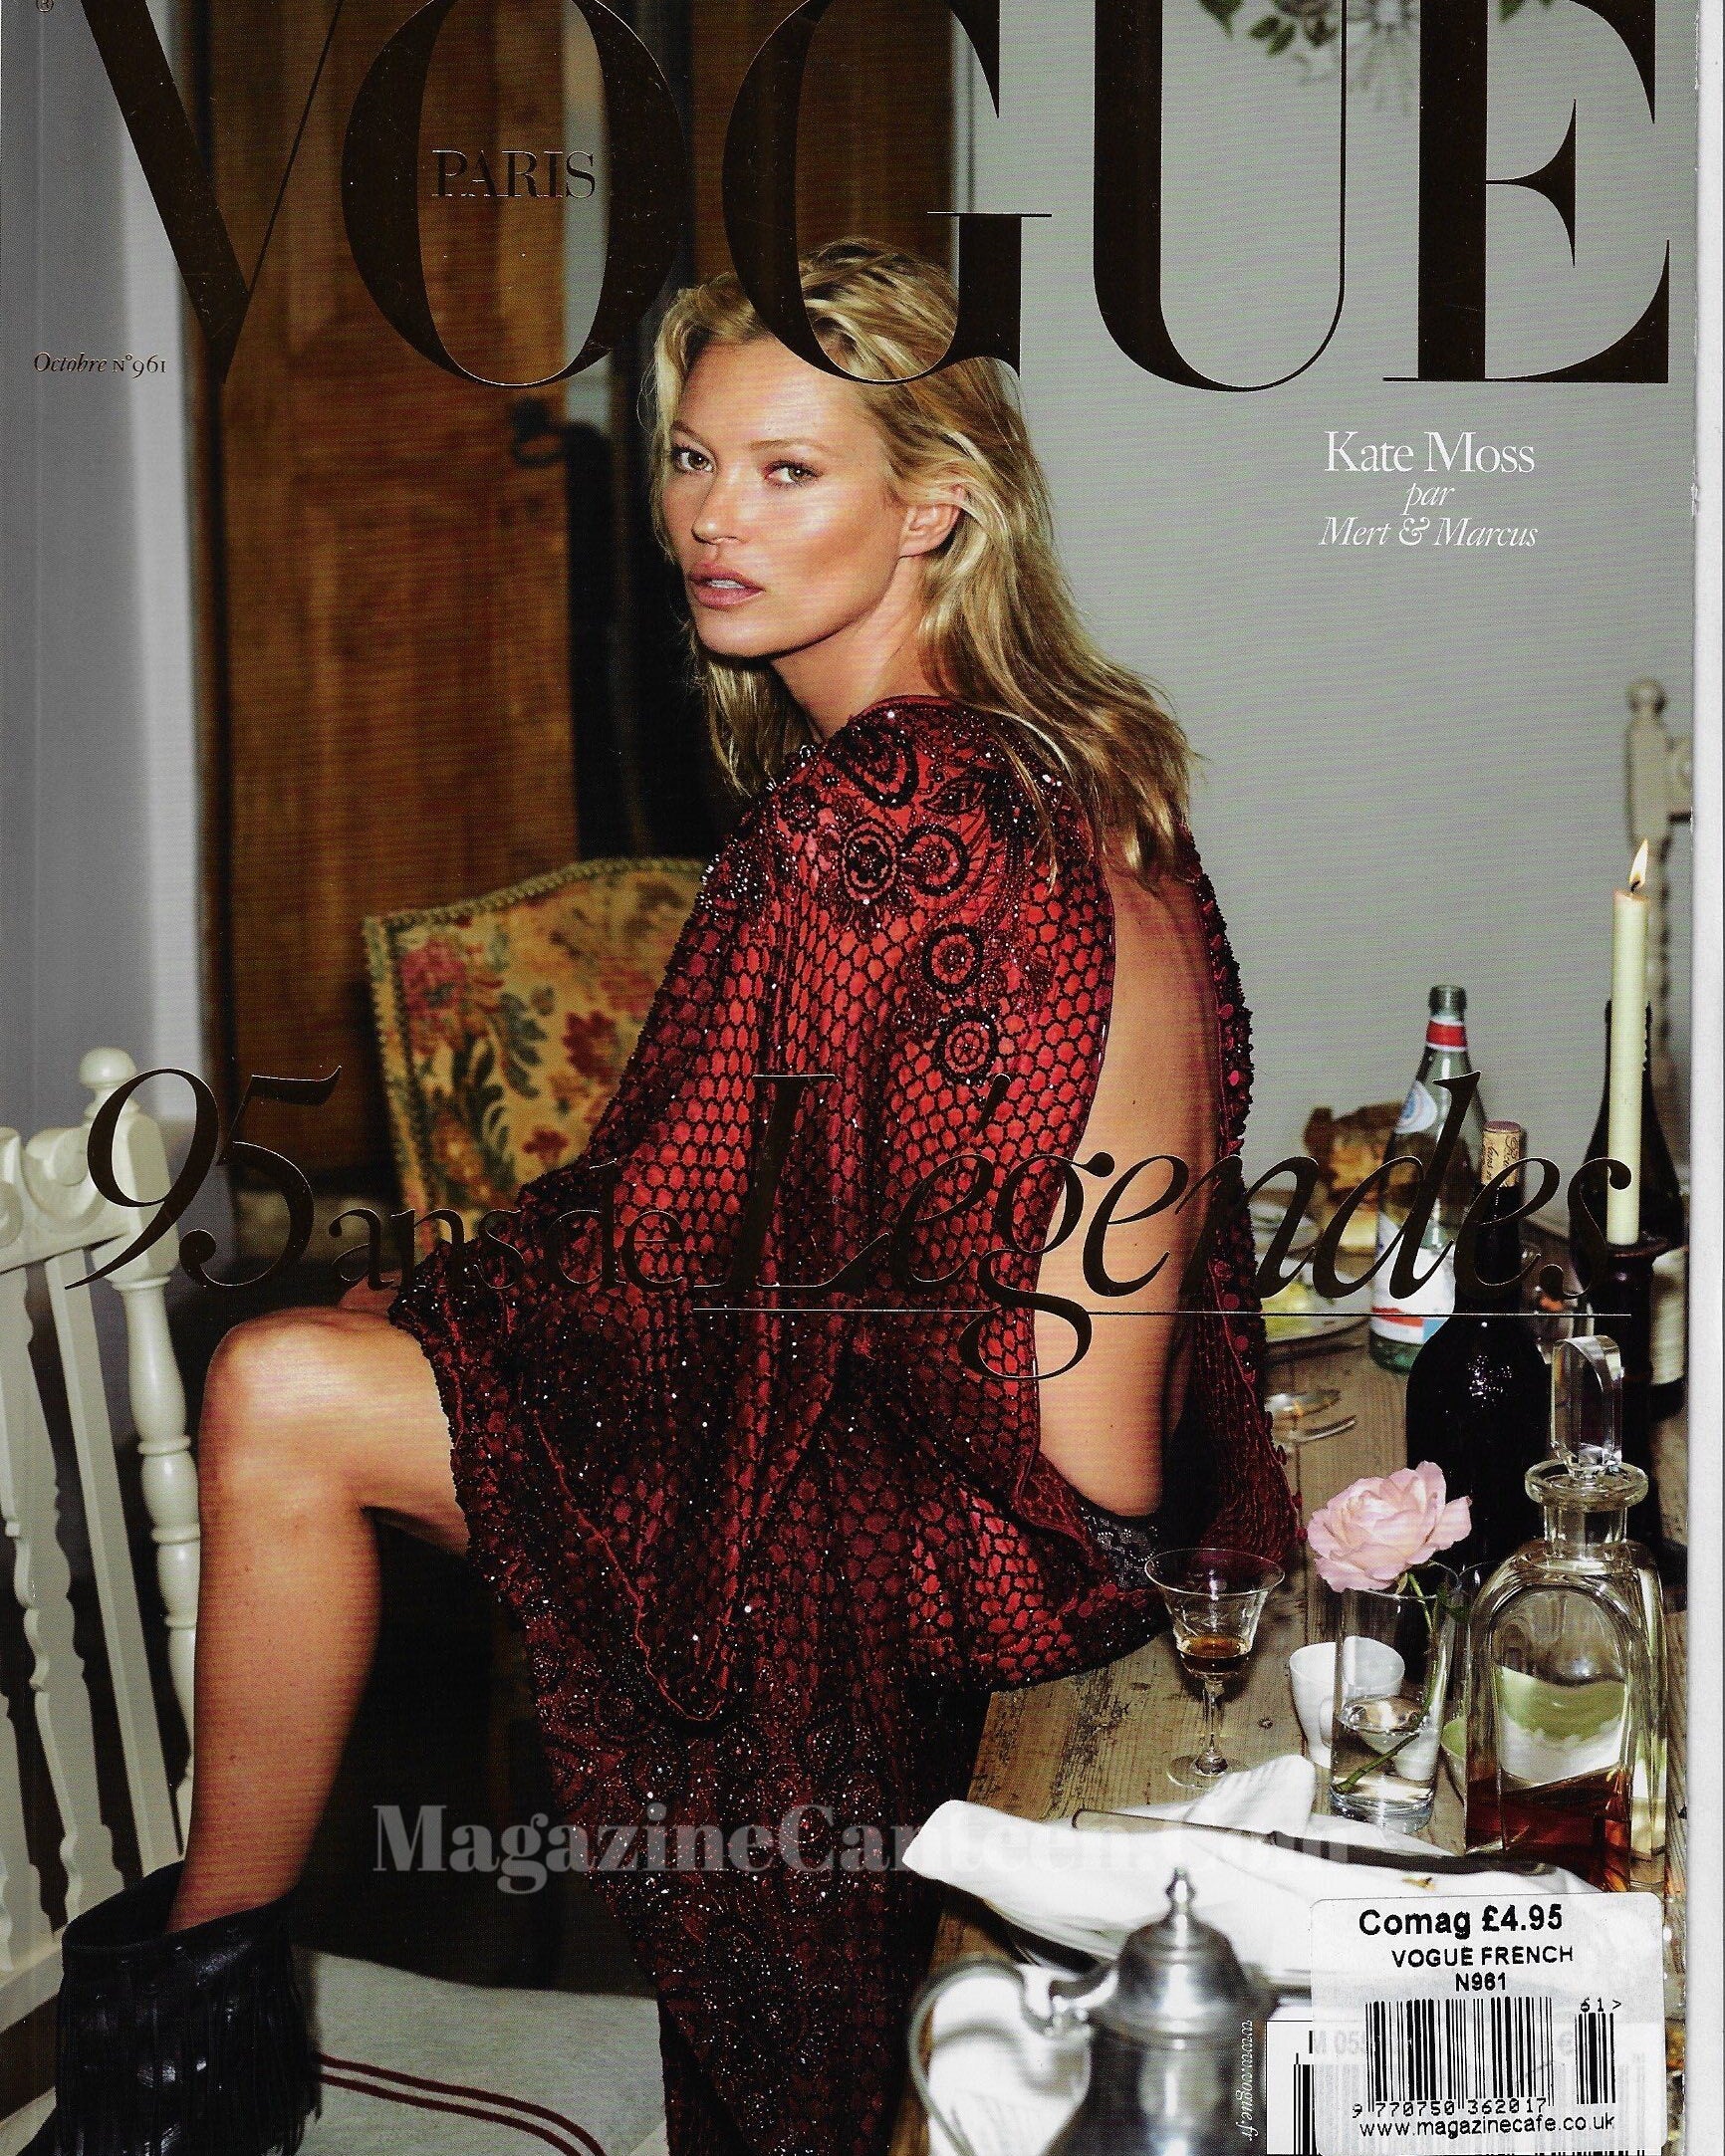 90TH ANNIVERSARY Vogue Paris Magazine 2015 - Kate Moss